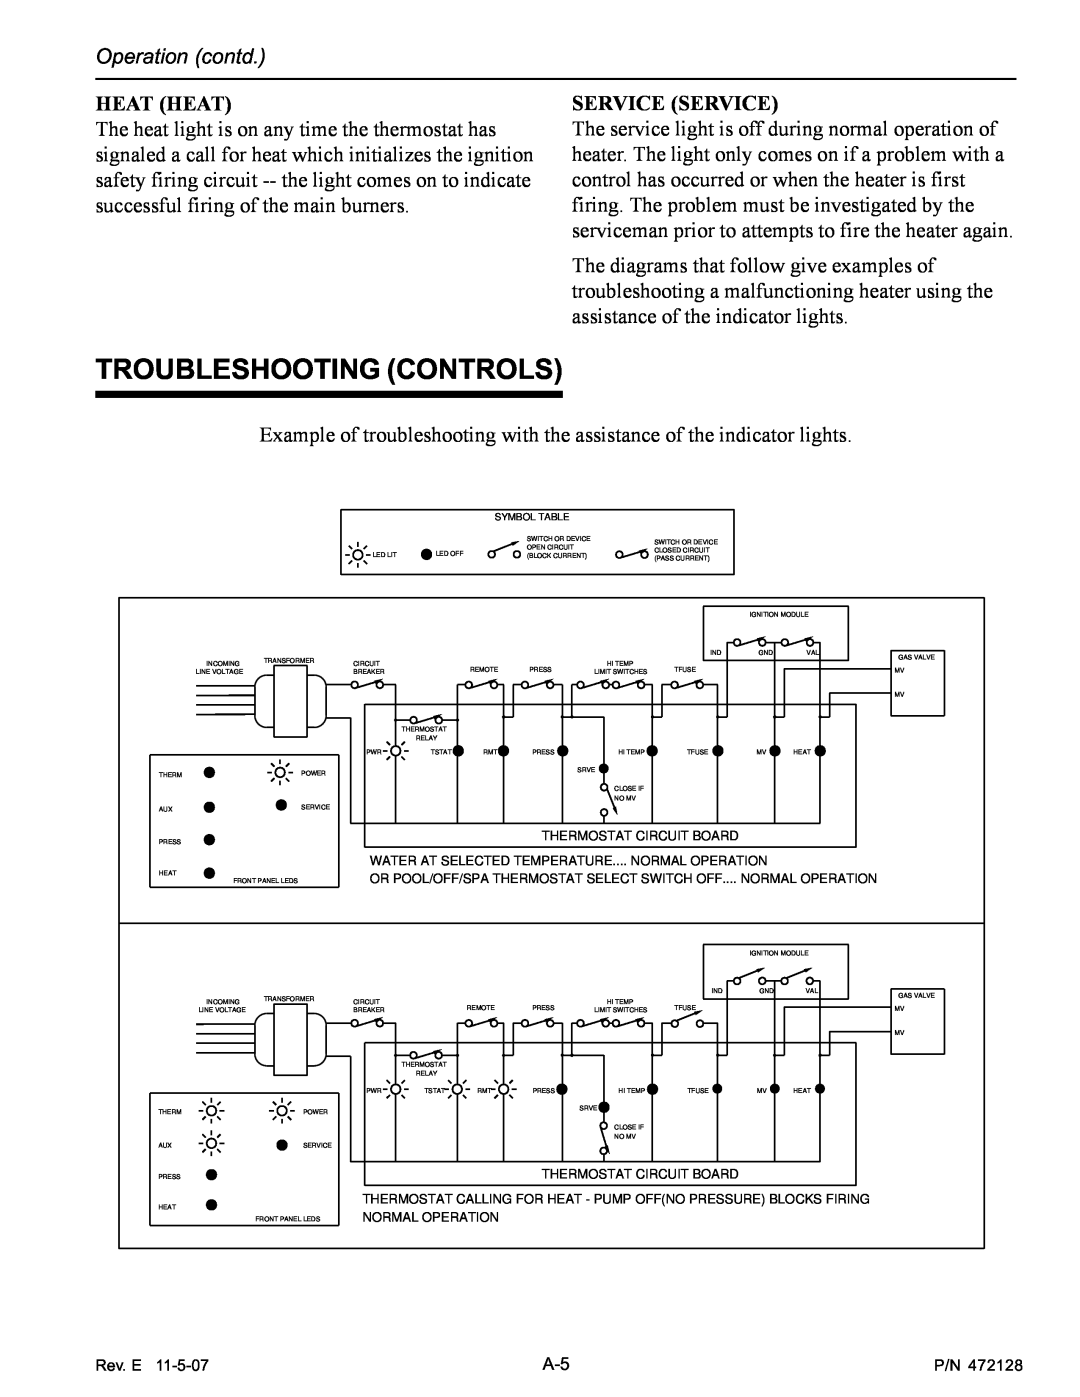 Pentair Hot Tub manual Troubleshooting Controls, Heat Heat, Service Service 